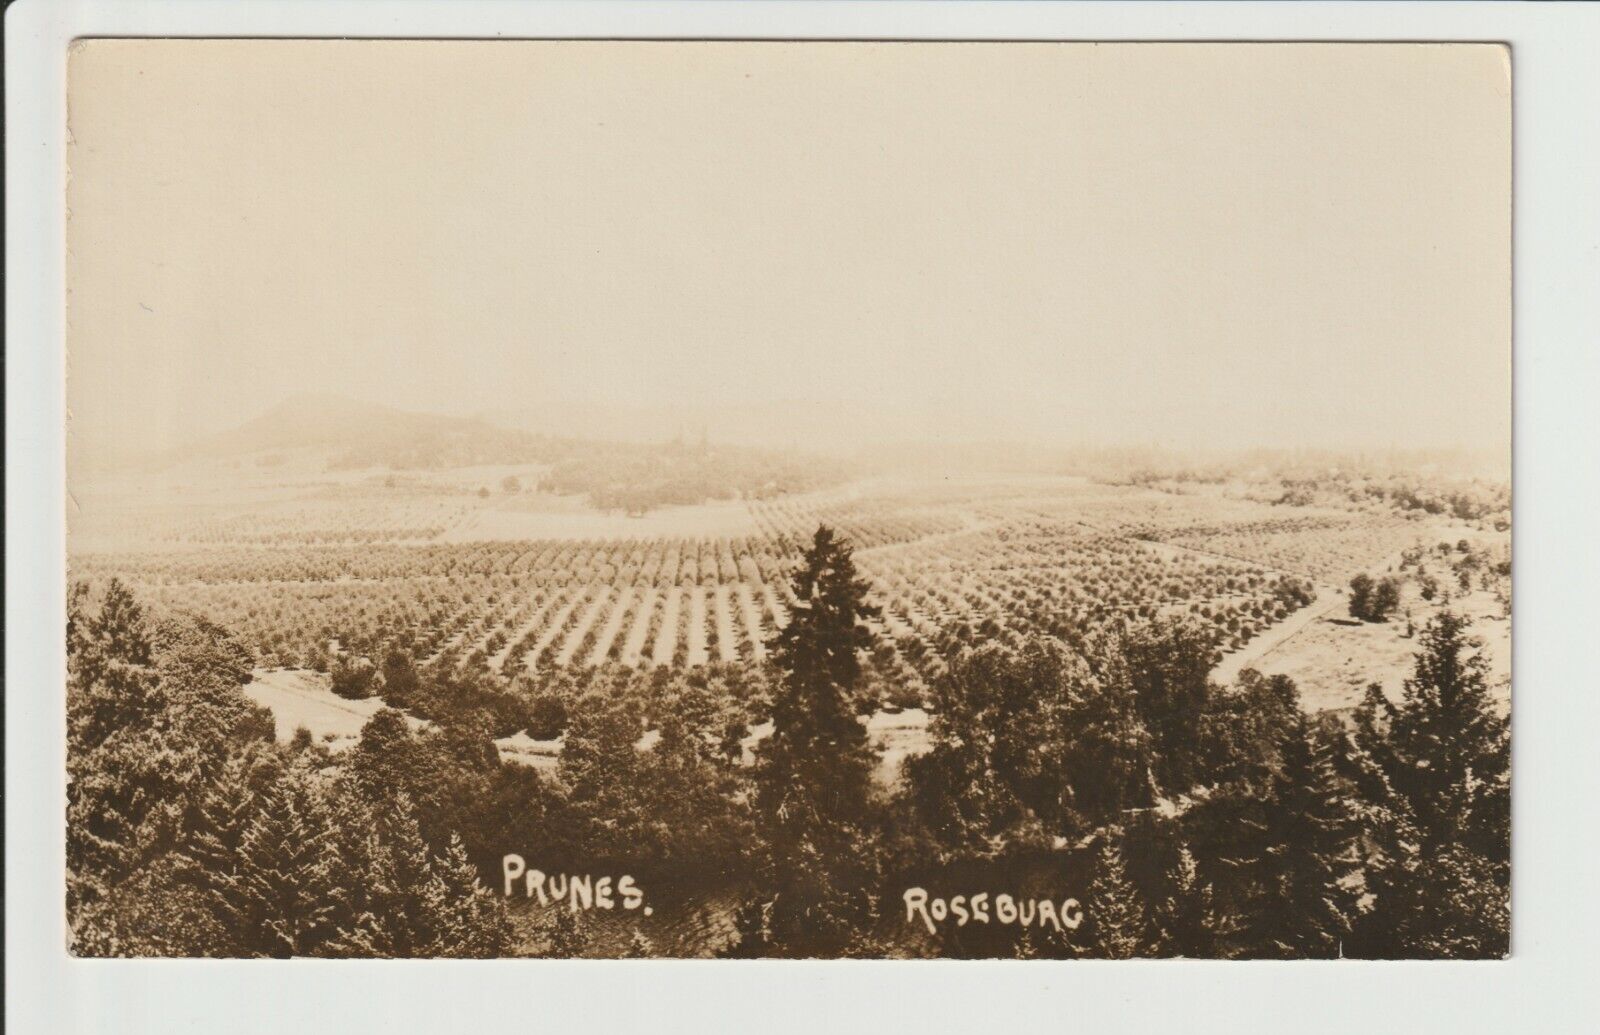 Roseburg Oregon RPPC Prune Trees farm 1910s era Real Photo Postcard OR UN-POSTED